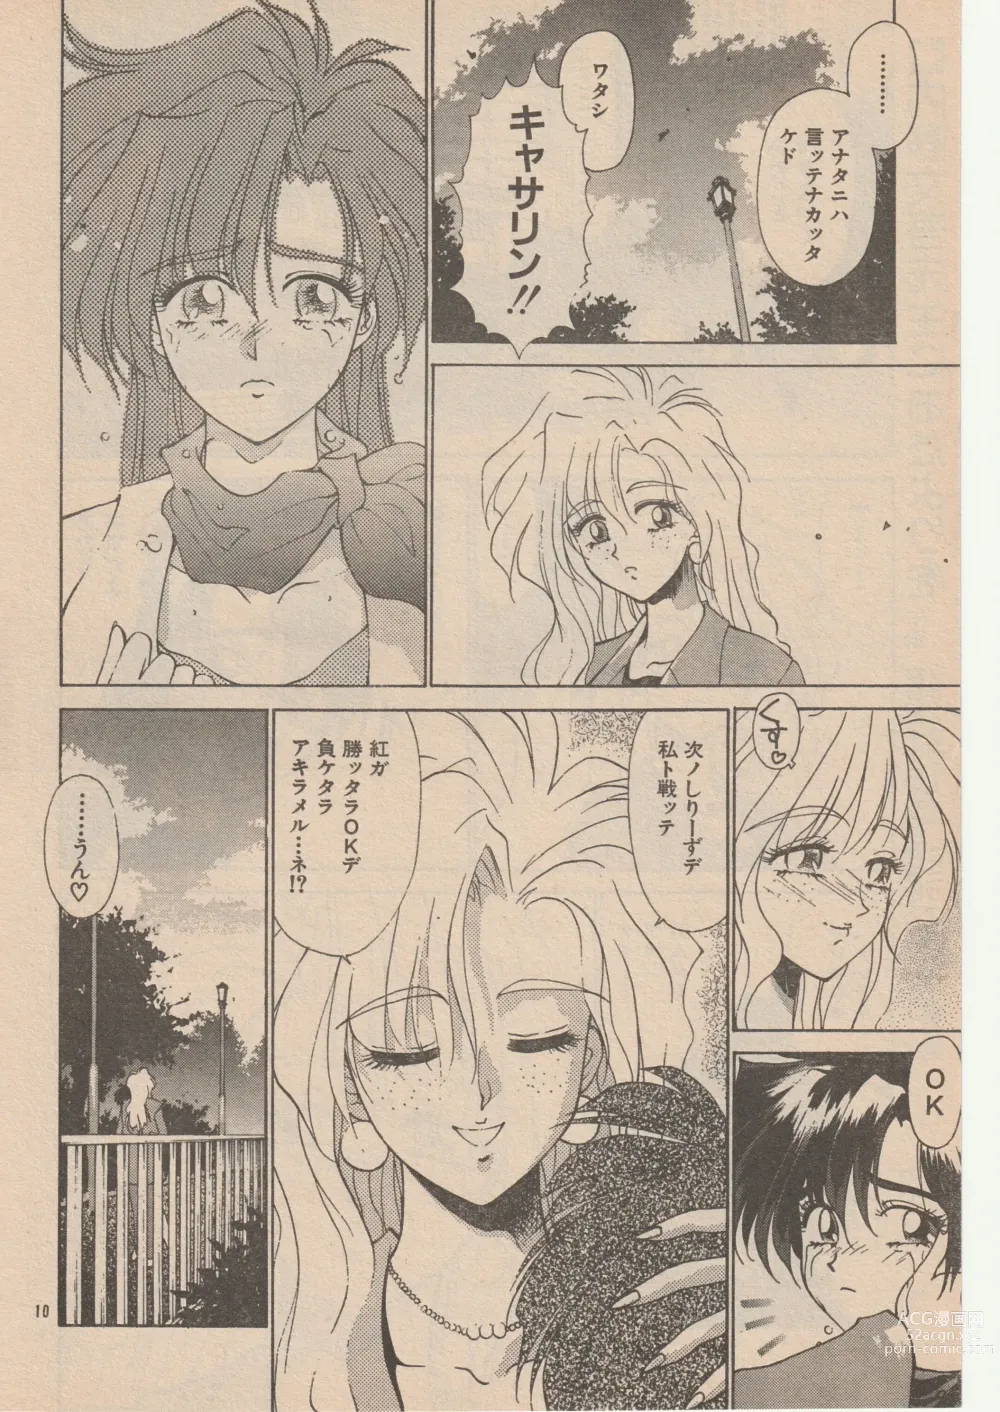 Page 10 of manga Wrestle Angels Monogatari